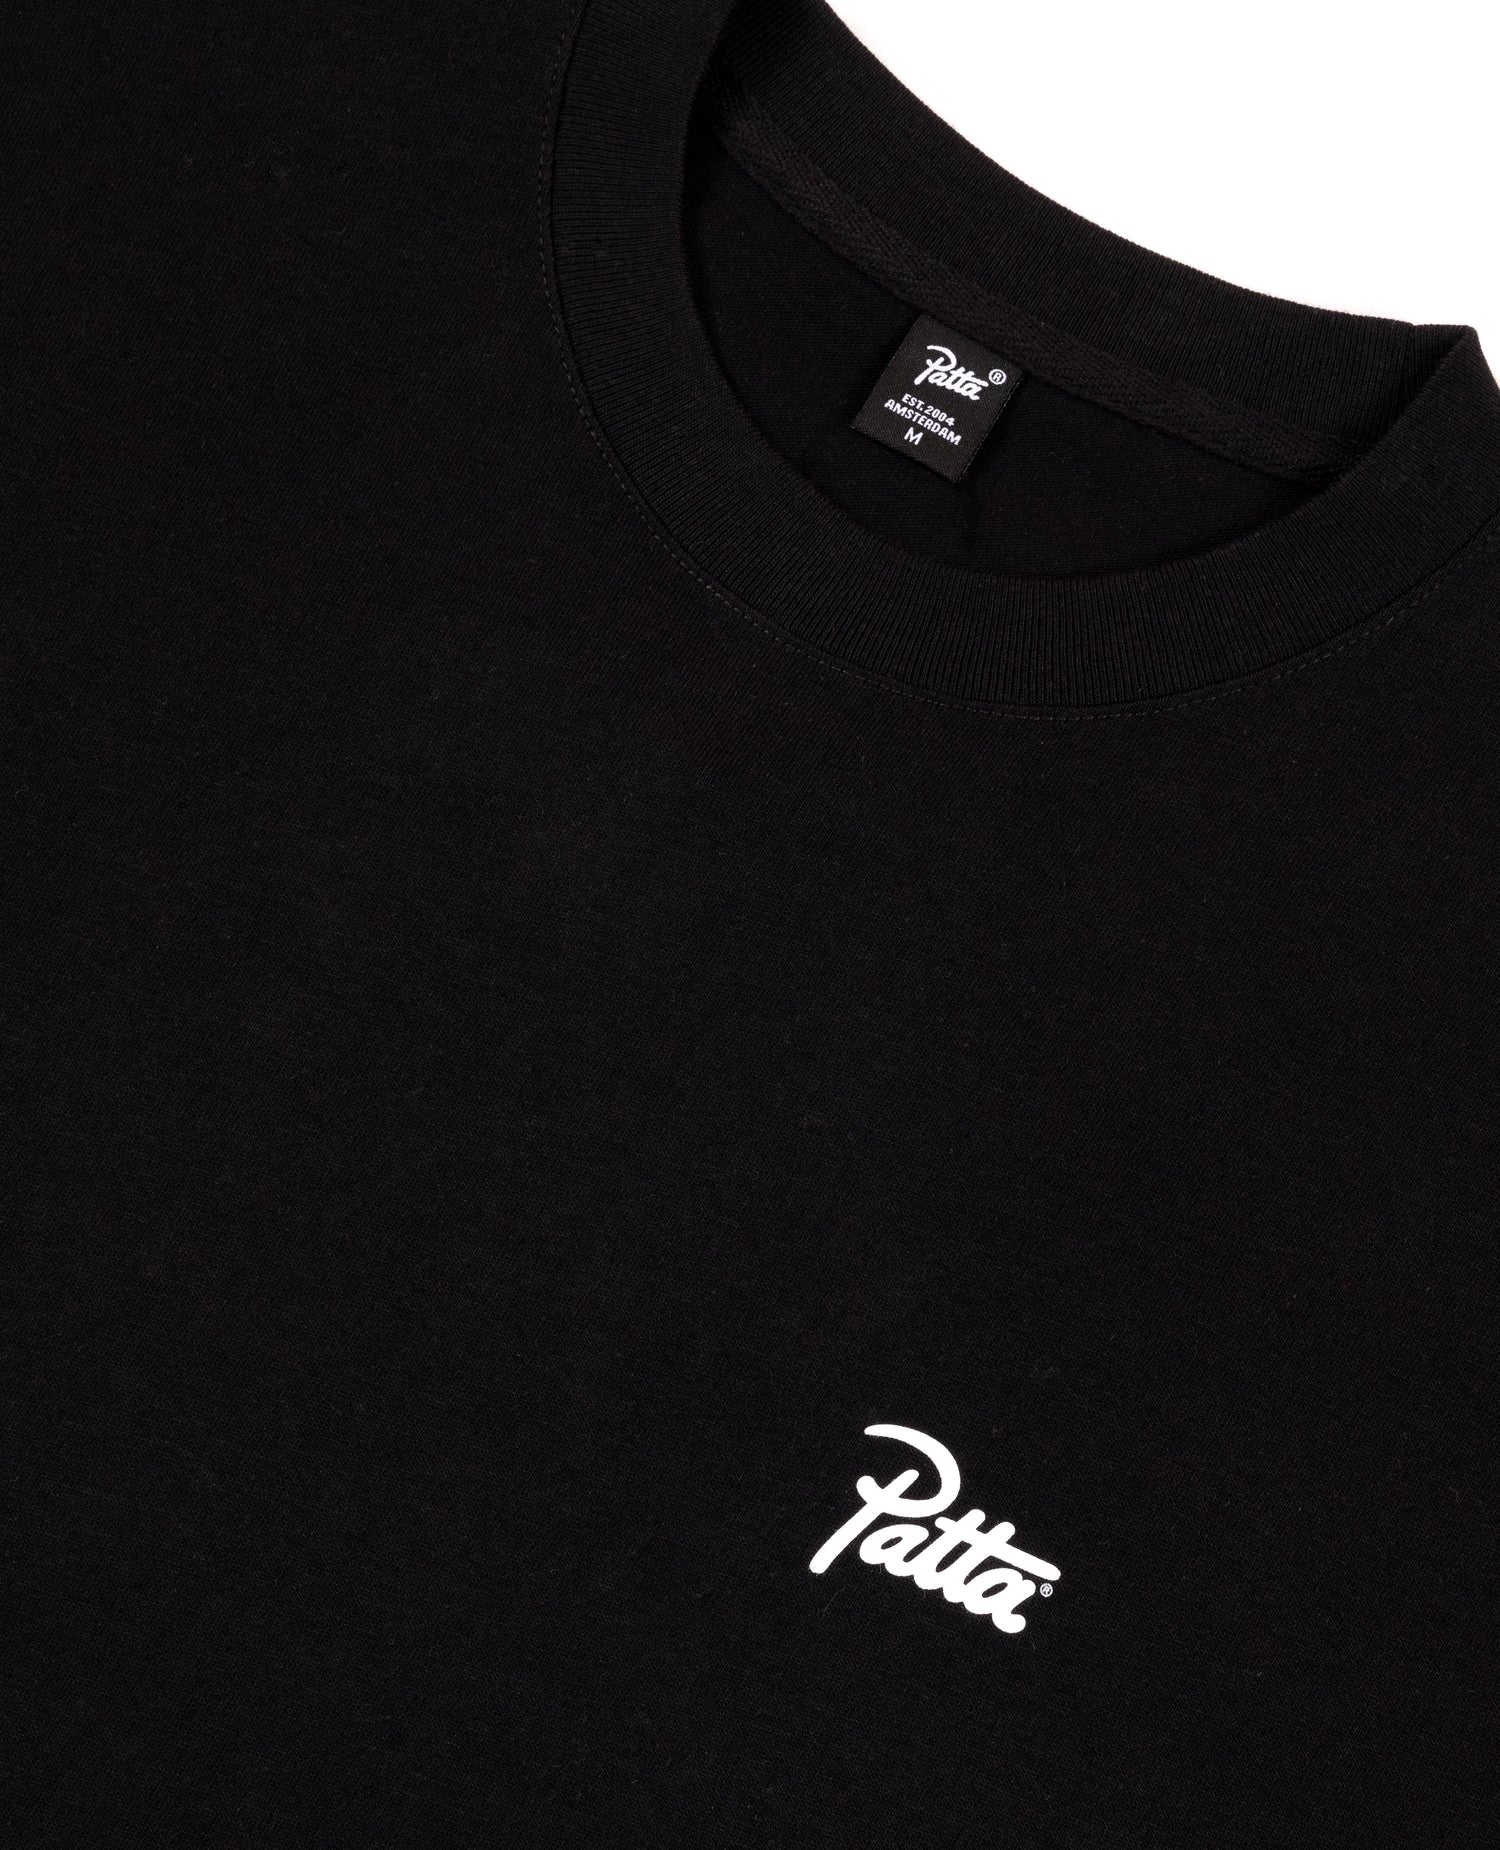 Patta Pattassium T-Shirt (Black) – Patta UK